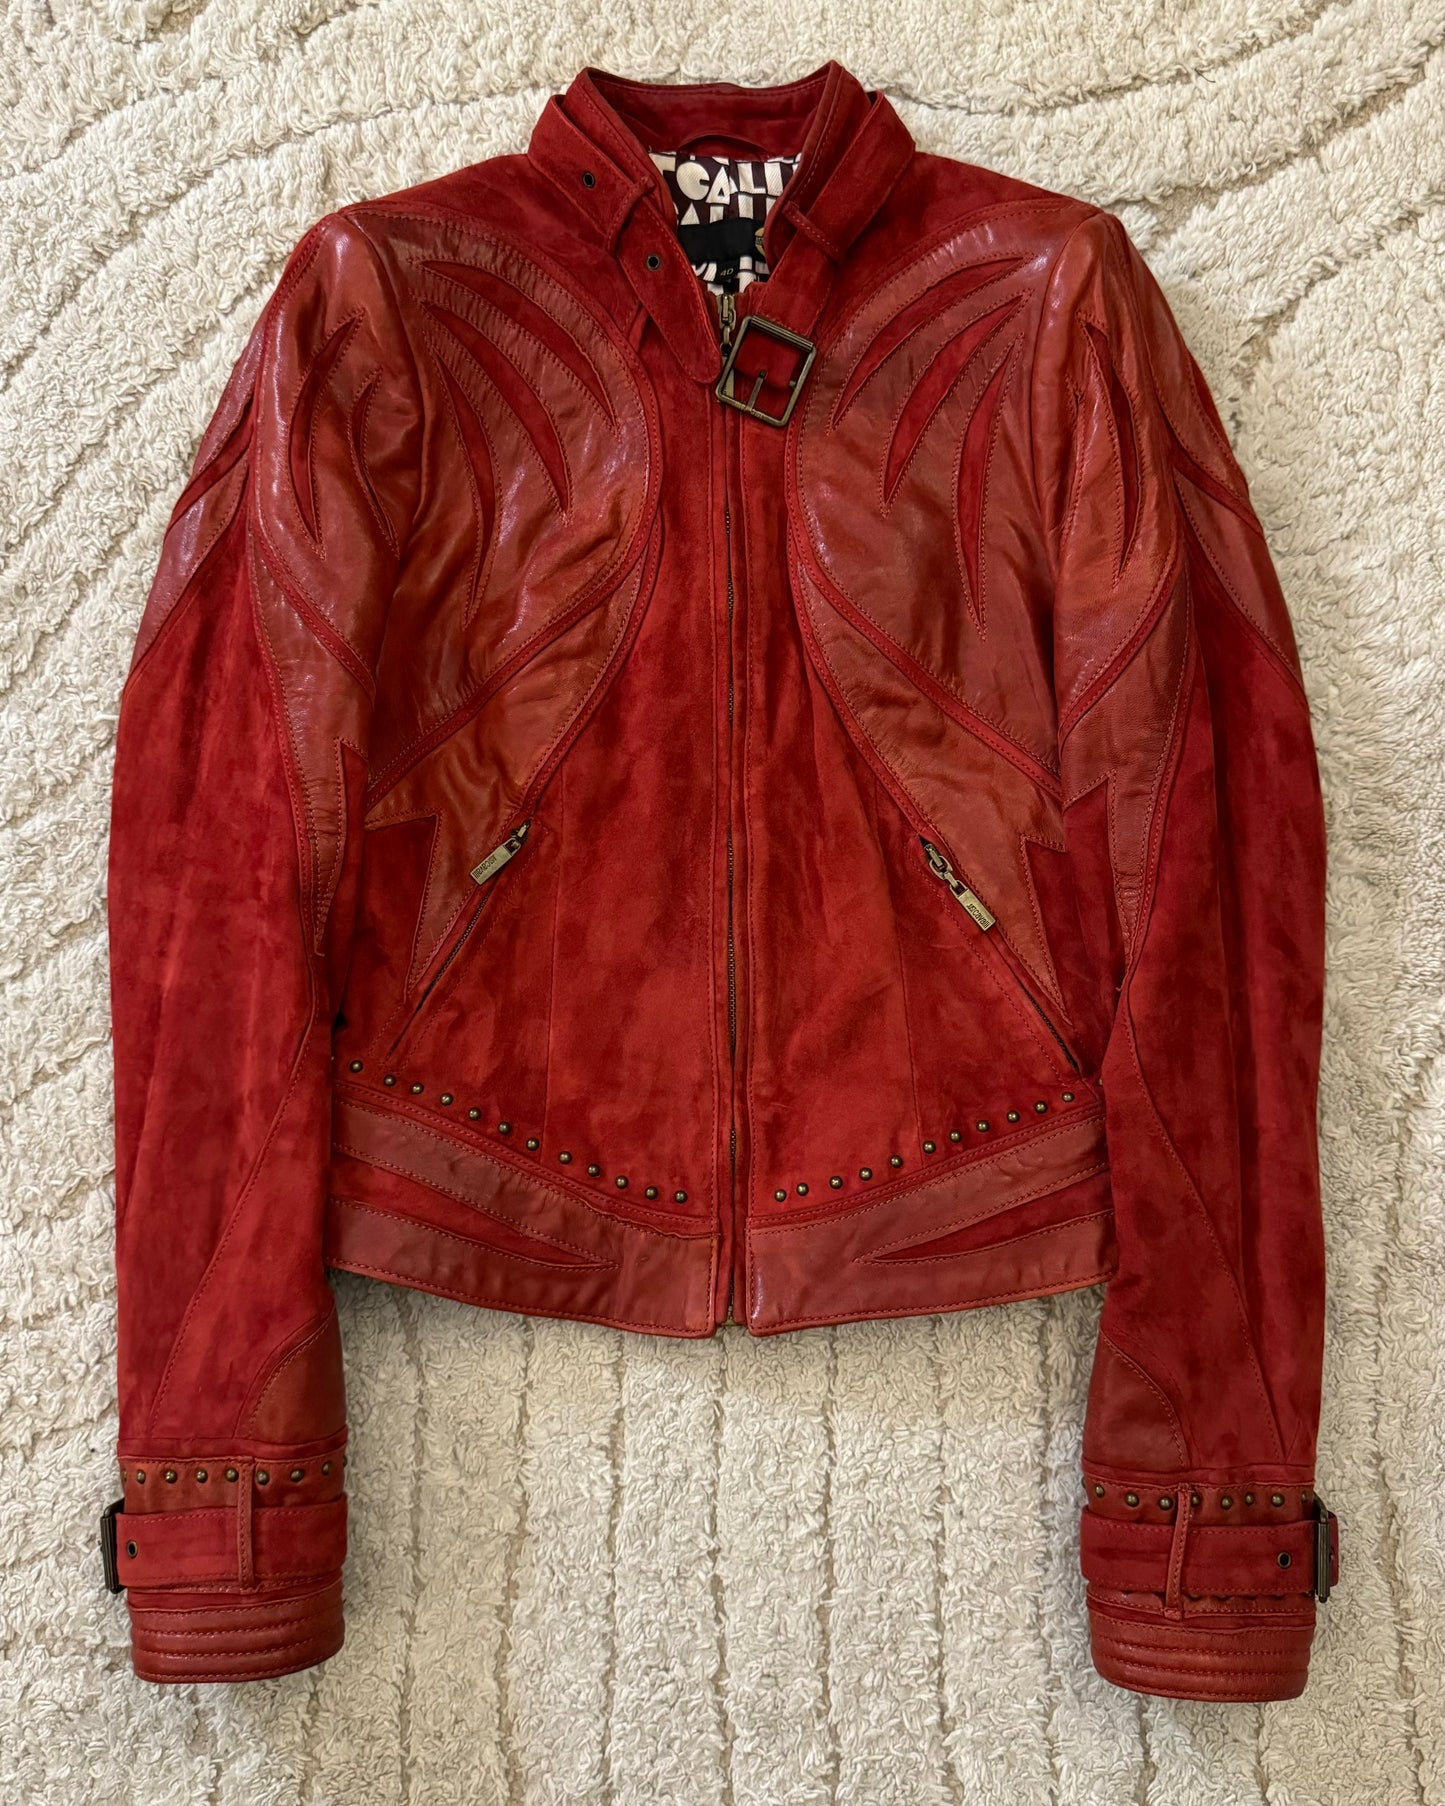 SS2009 Cavalli Geometrical Studded Leather Jacket (XS)